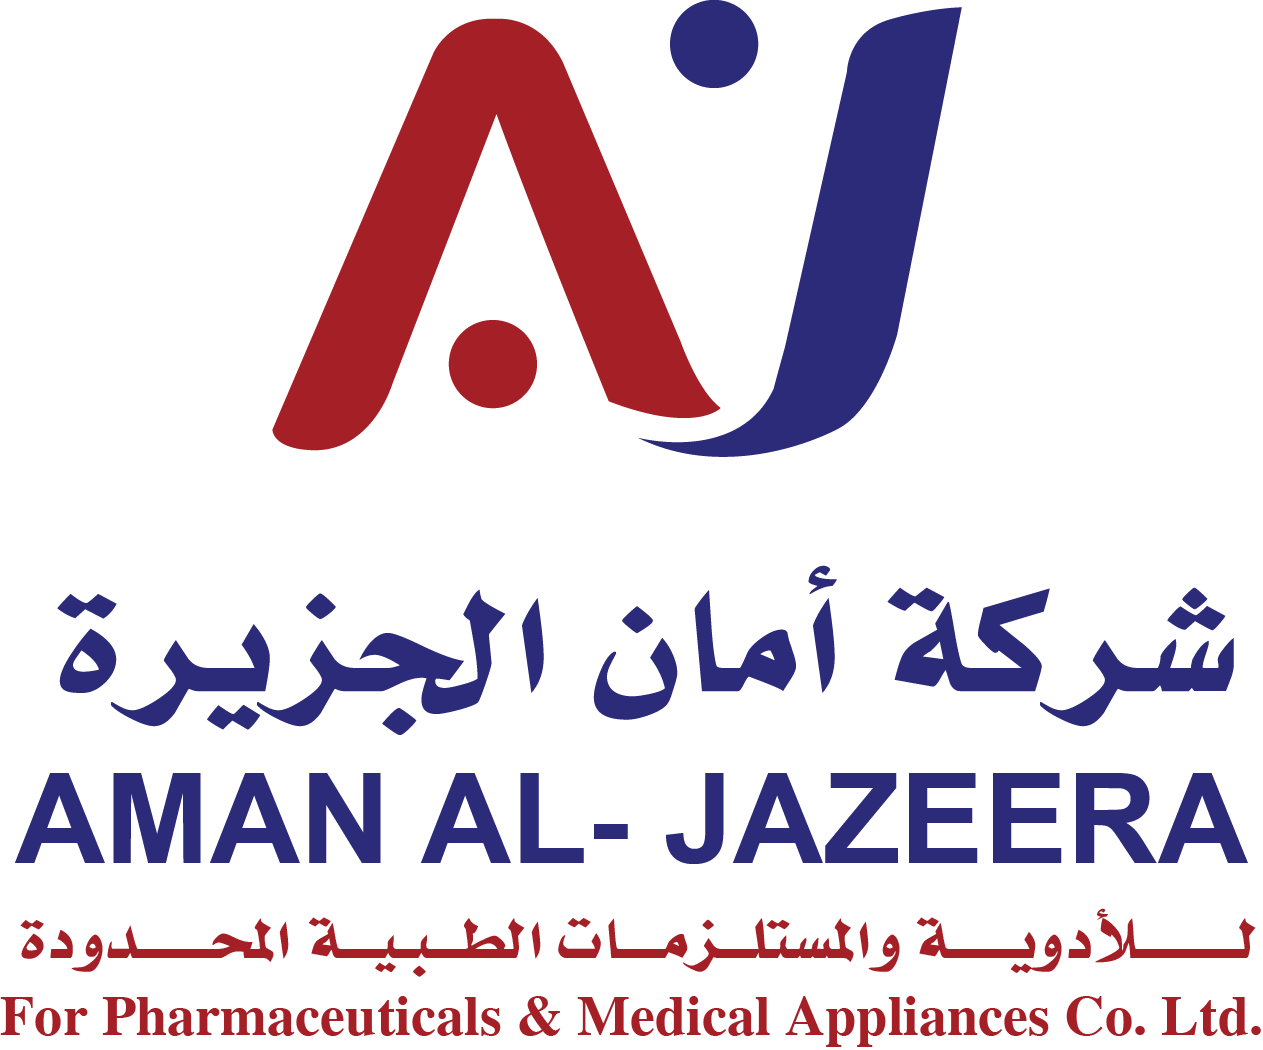 AMAN AL-JAZEERA FOR PHARMACEUTICALS & MEDICAL APPLIANCES CO. LTD.